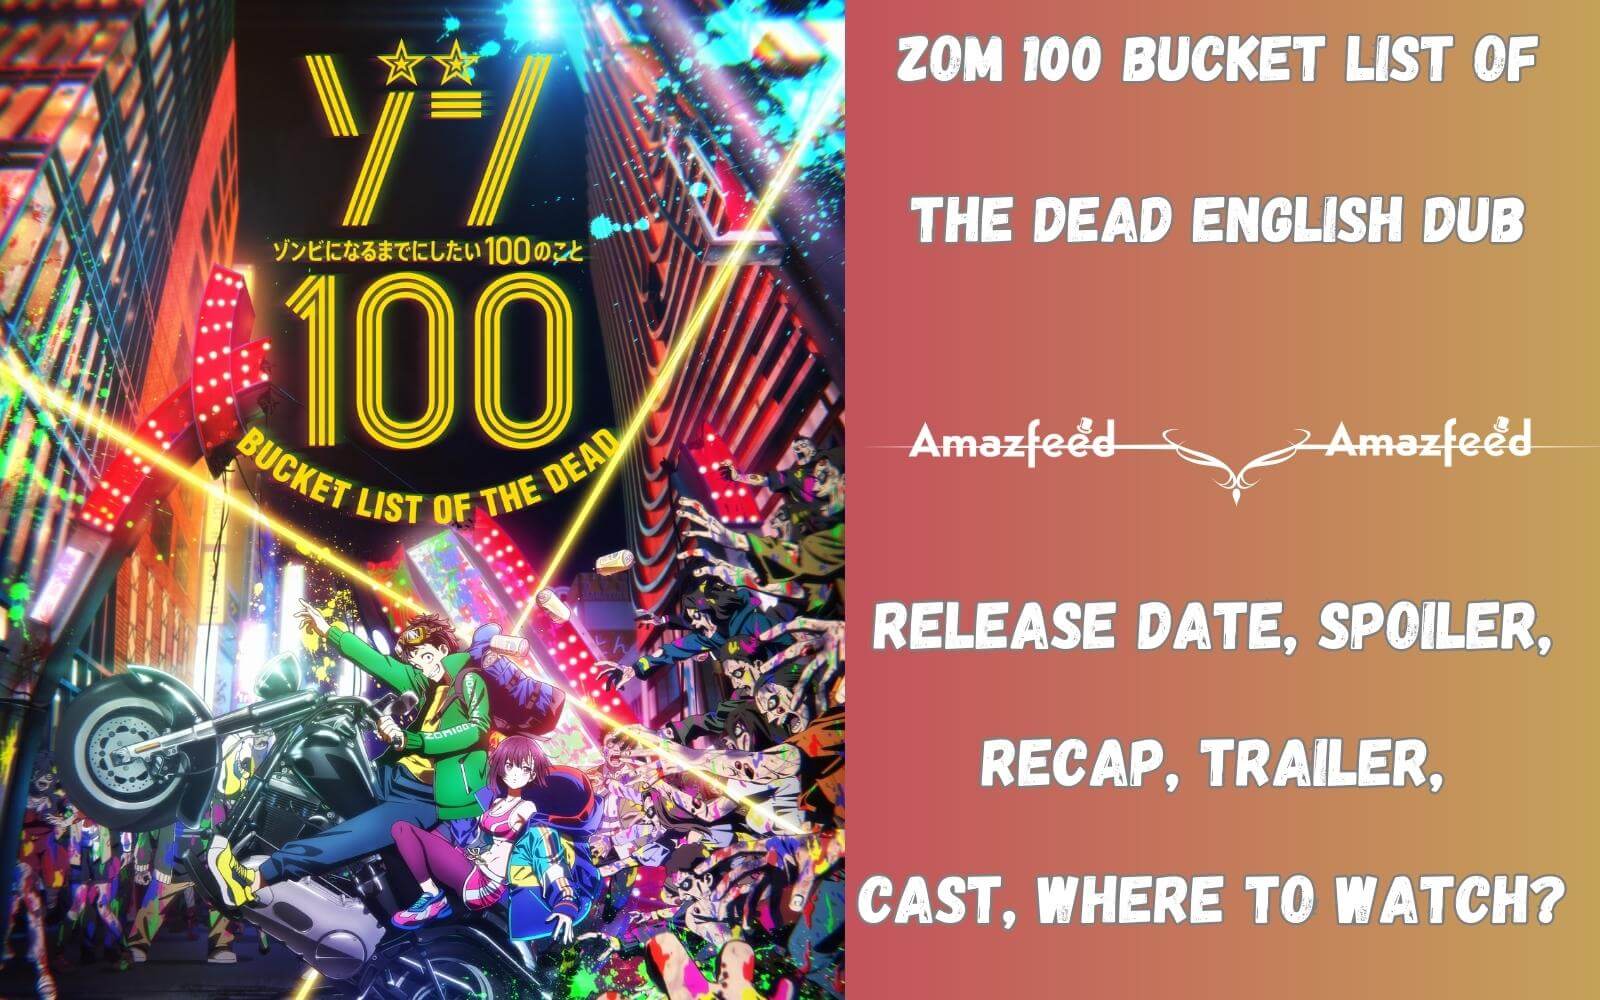 Zom 100: Bucket List of the Dead (Portuguese Dub) - Watch on